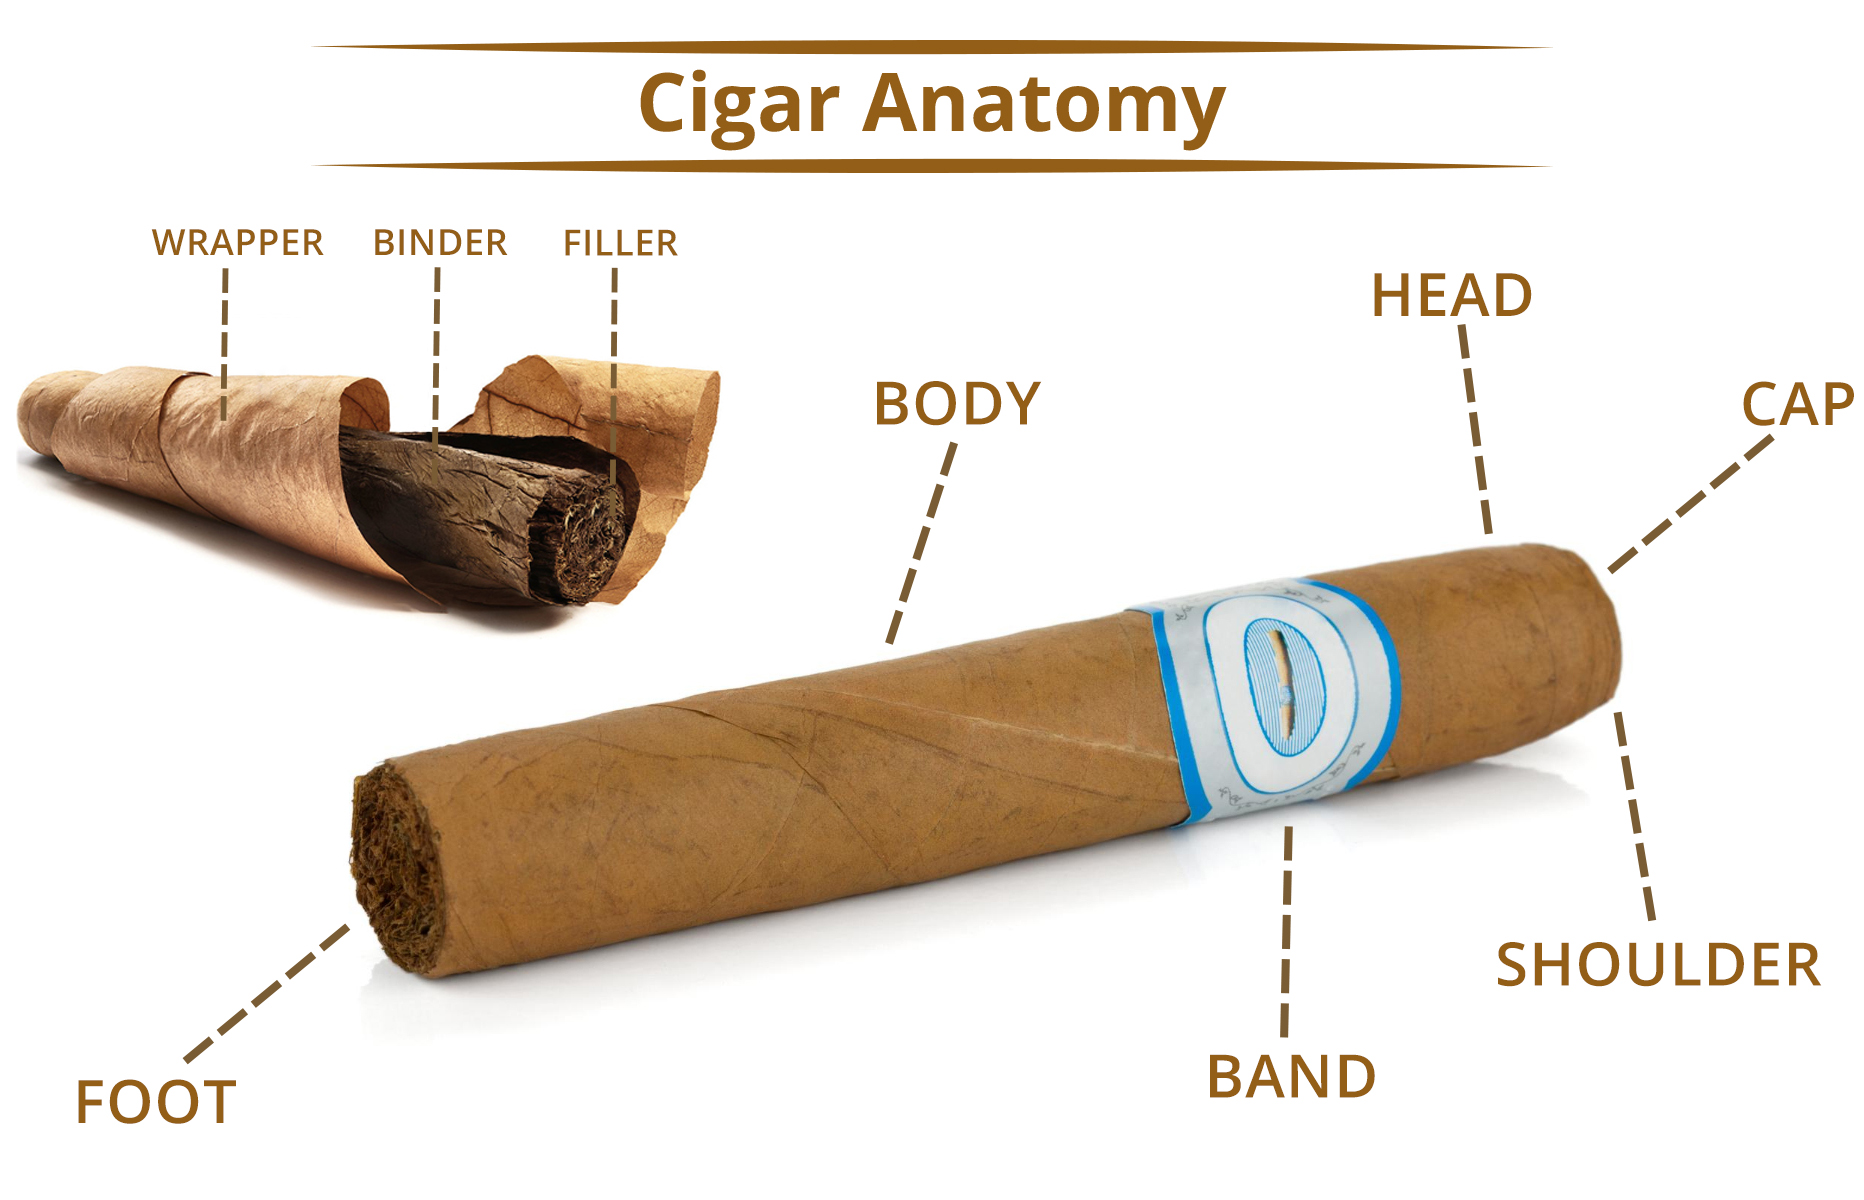 All parts of a handmade cigar